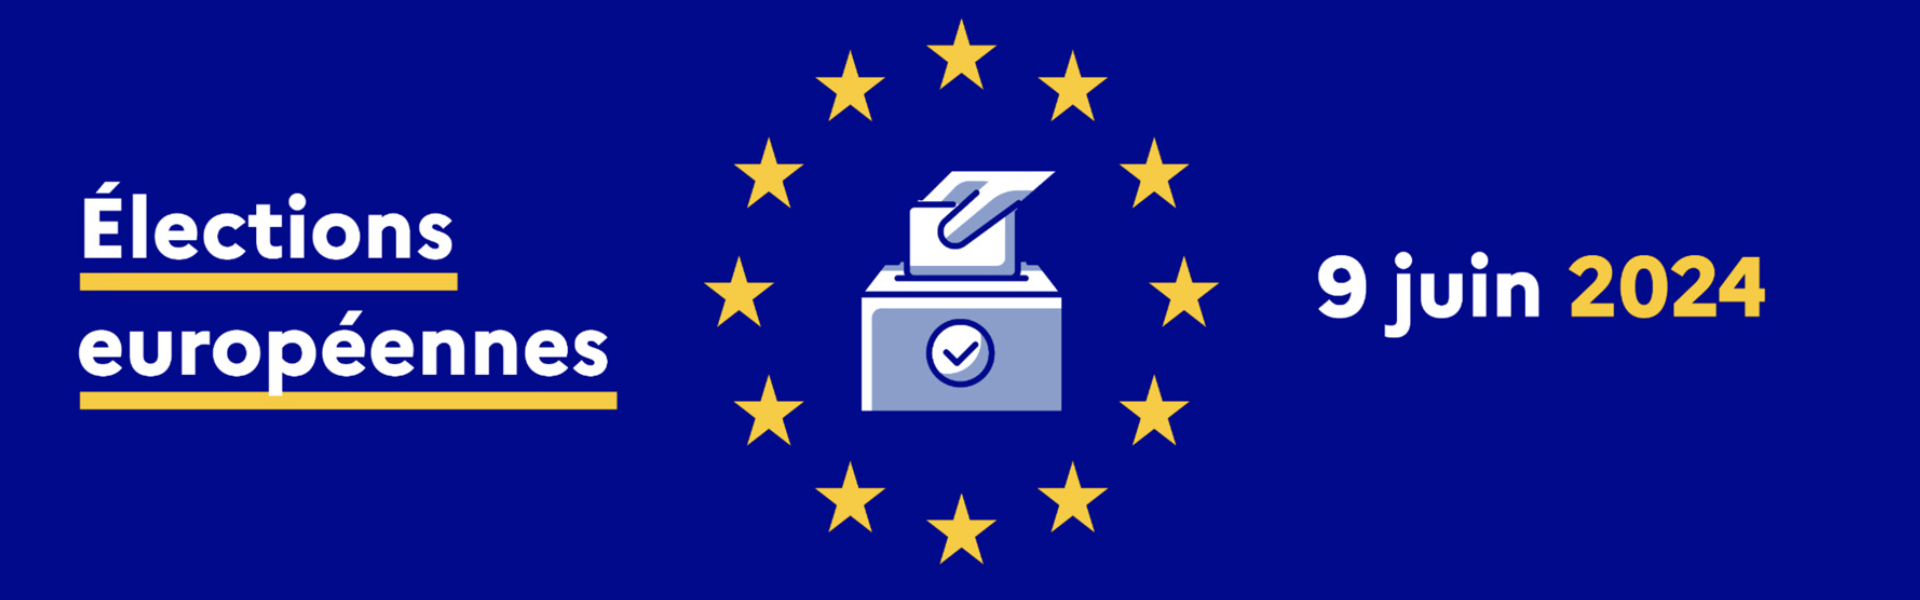 elections europeennes 9 juin 2024